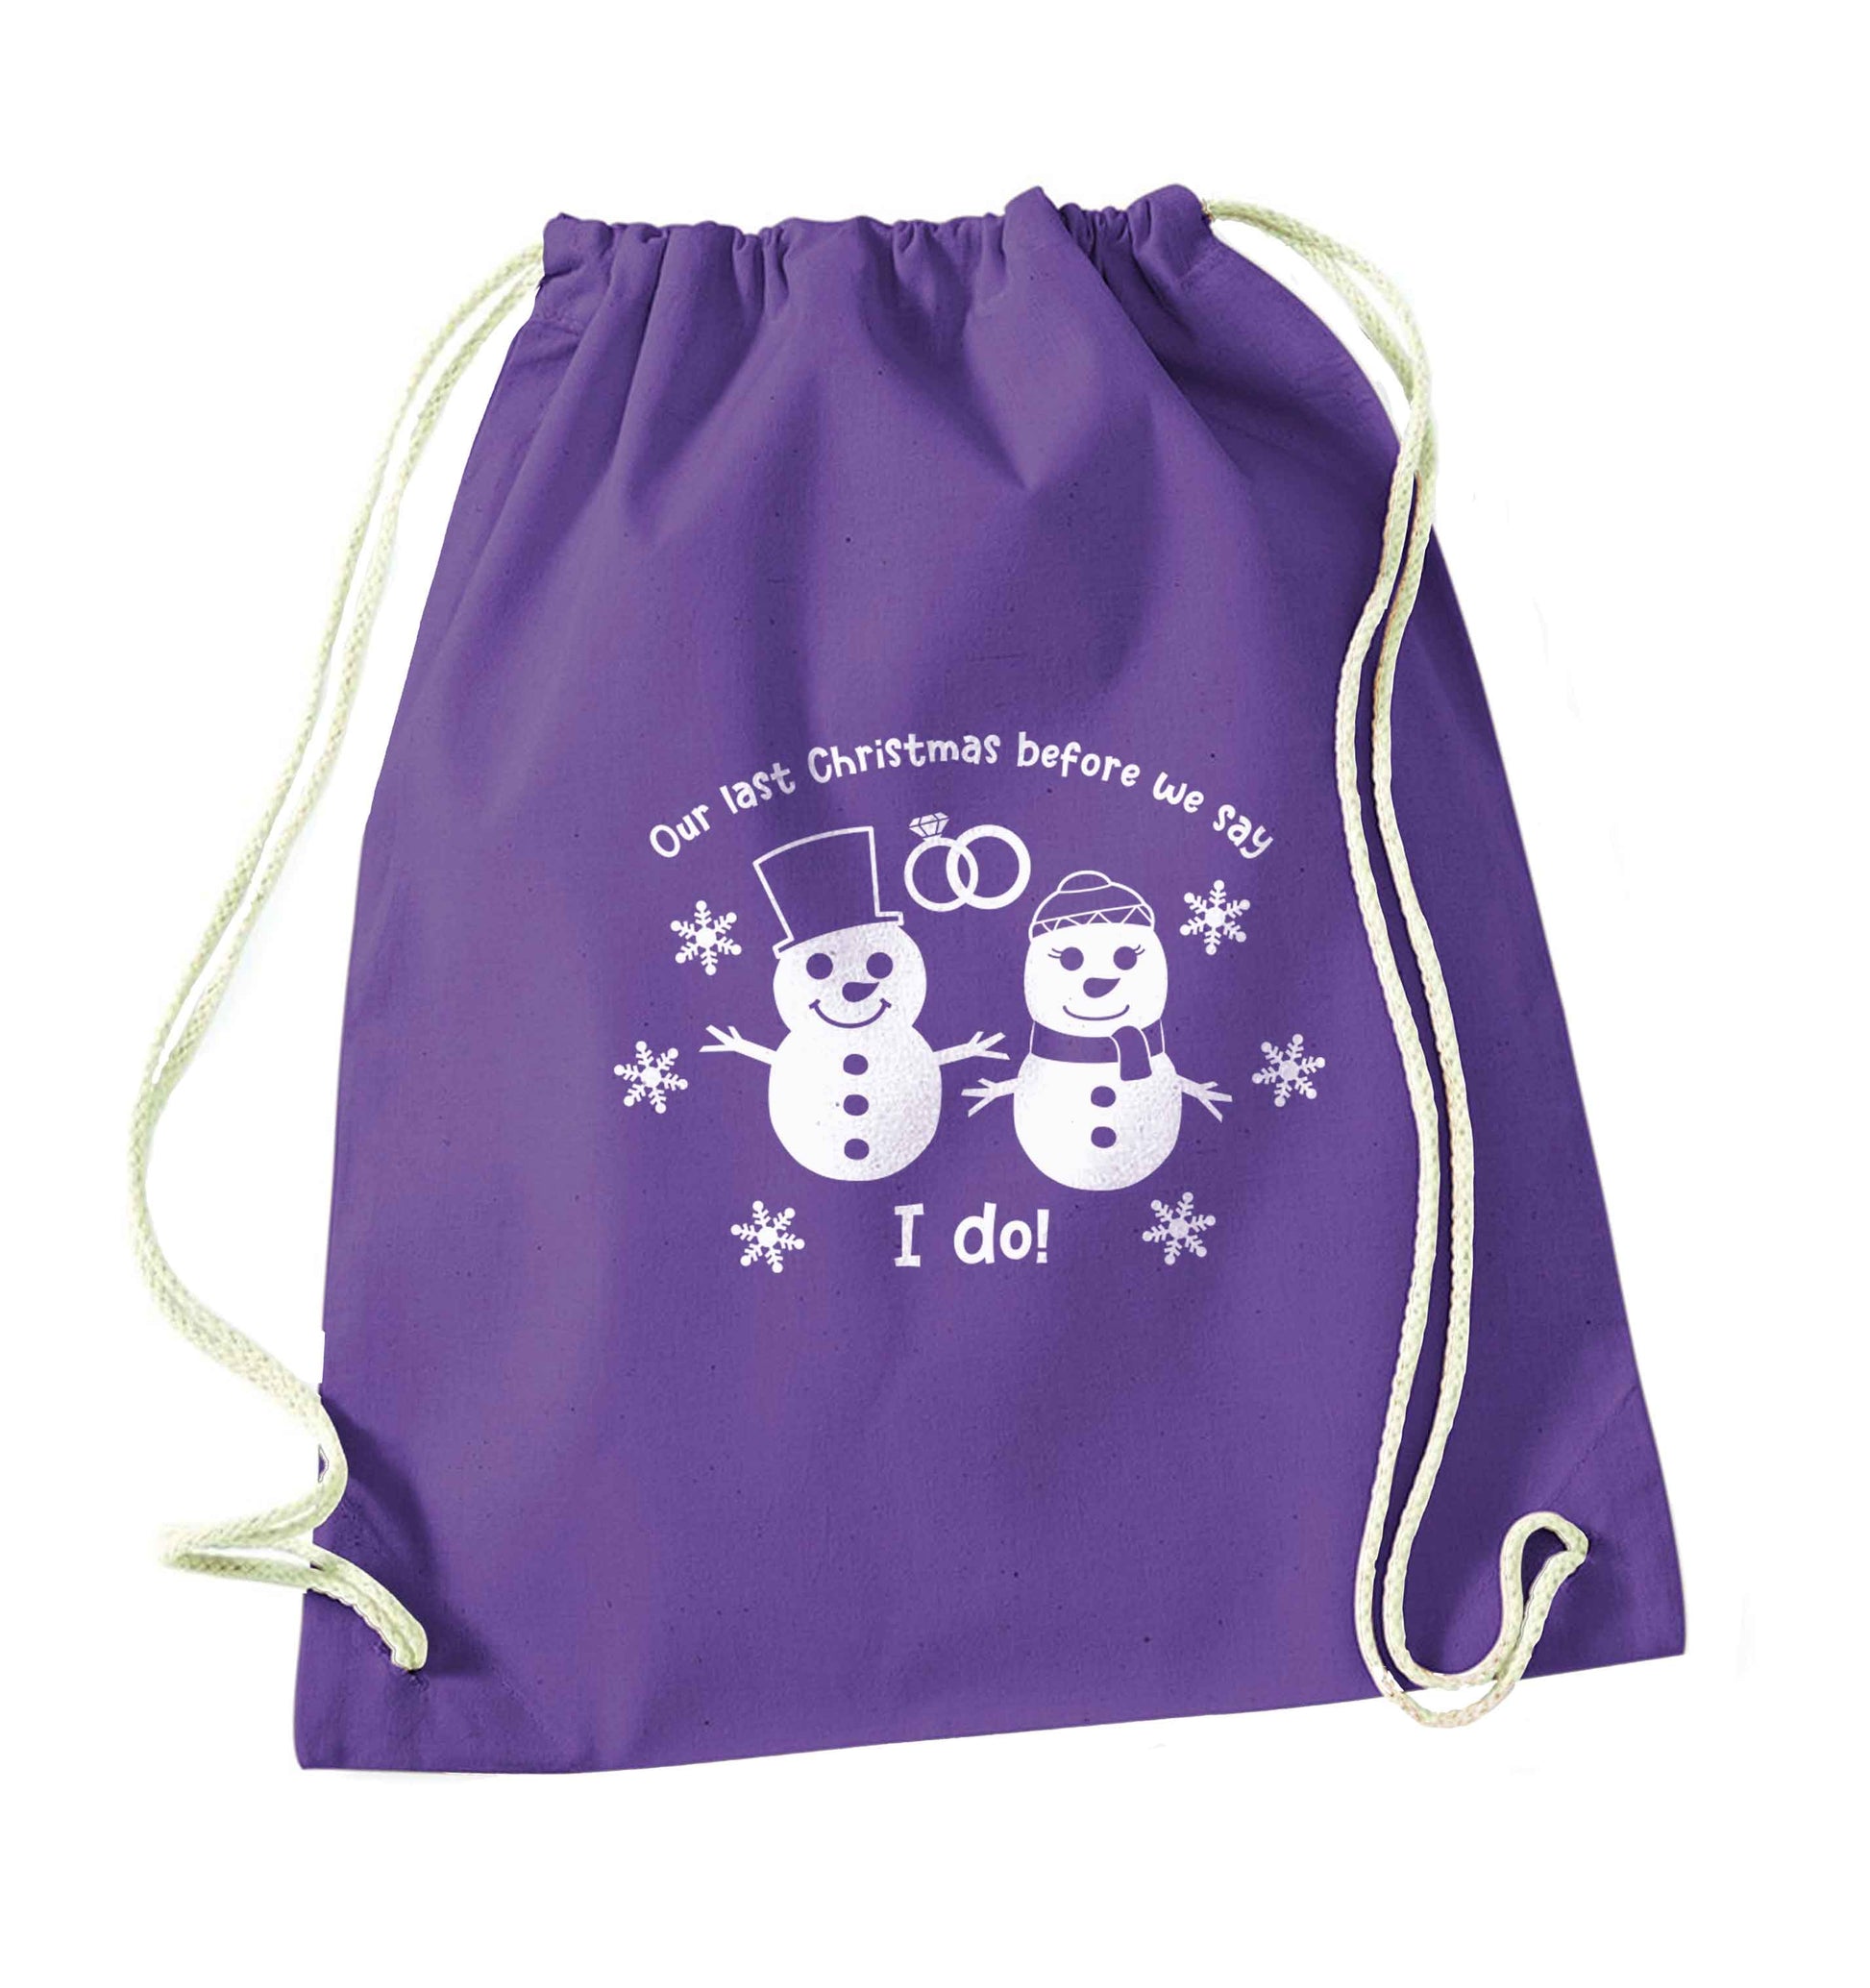 Last Christmas before we say I do purple drawstring bag